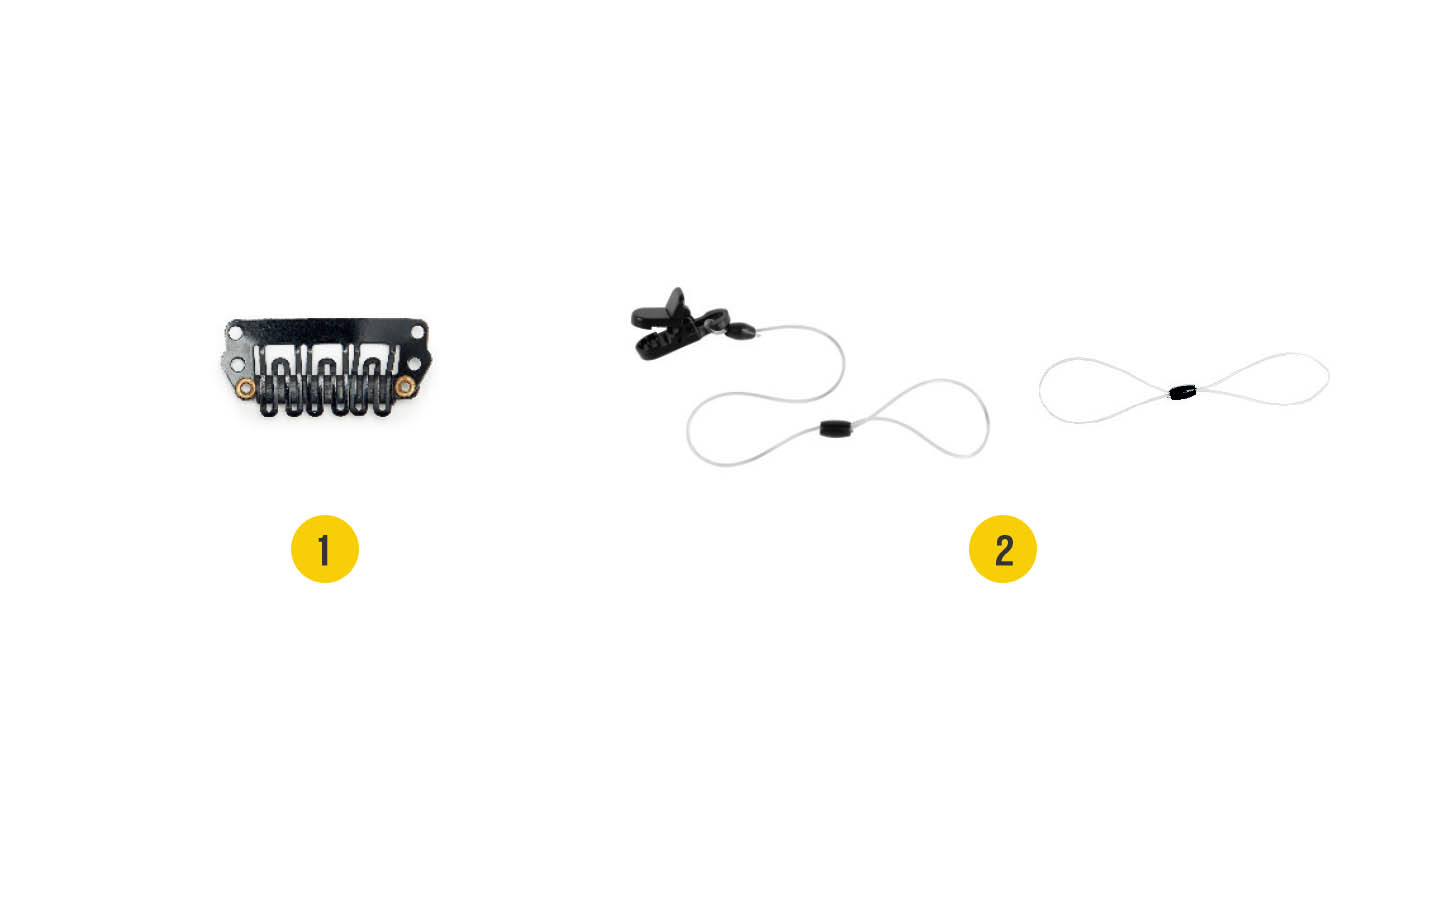 Nucleus Kanso 聲音處理器配件圖像：1. 配備鱷魚夾的長安全線，2。配備髮夾的短安全線